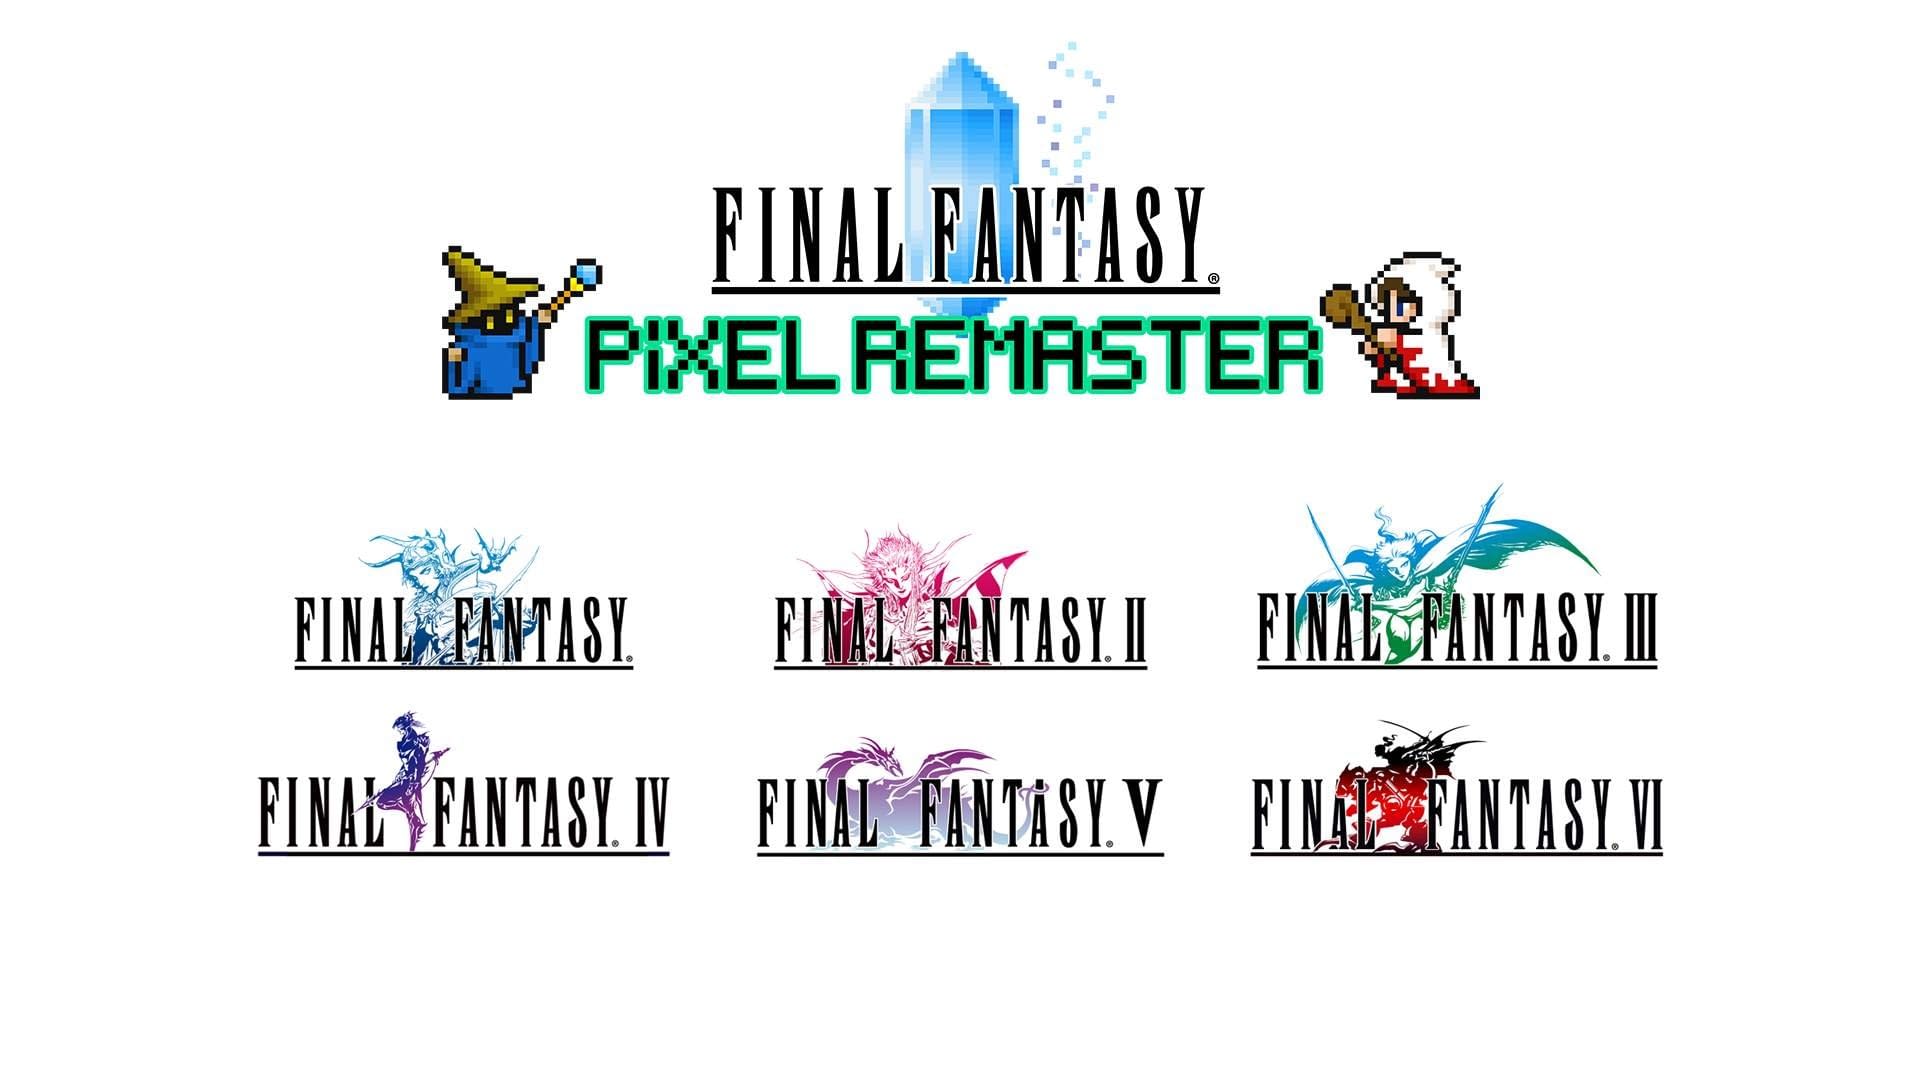 Final Fantasy Pixel Remaster sales reached 2 million!